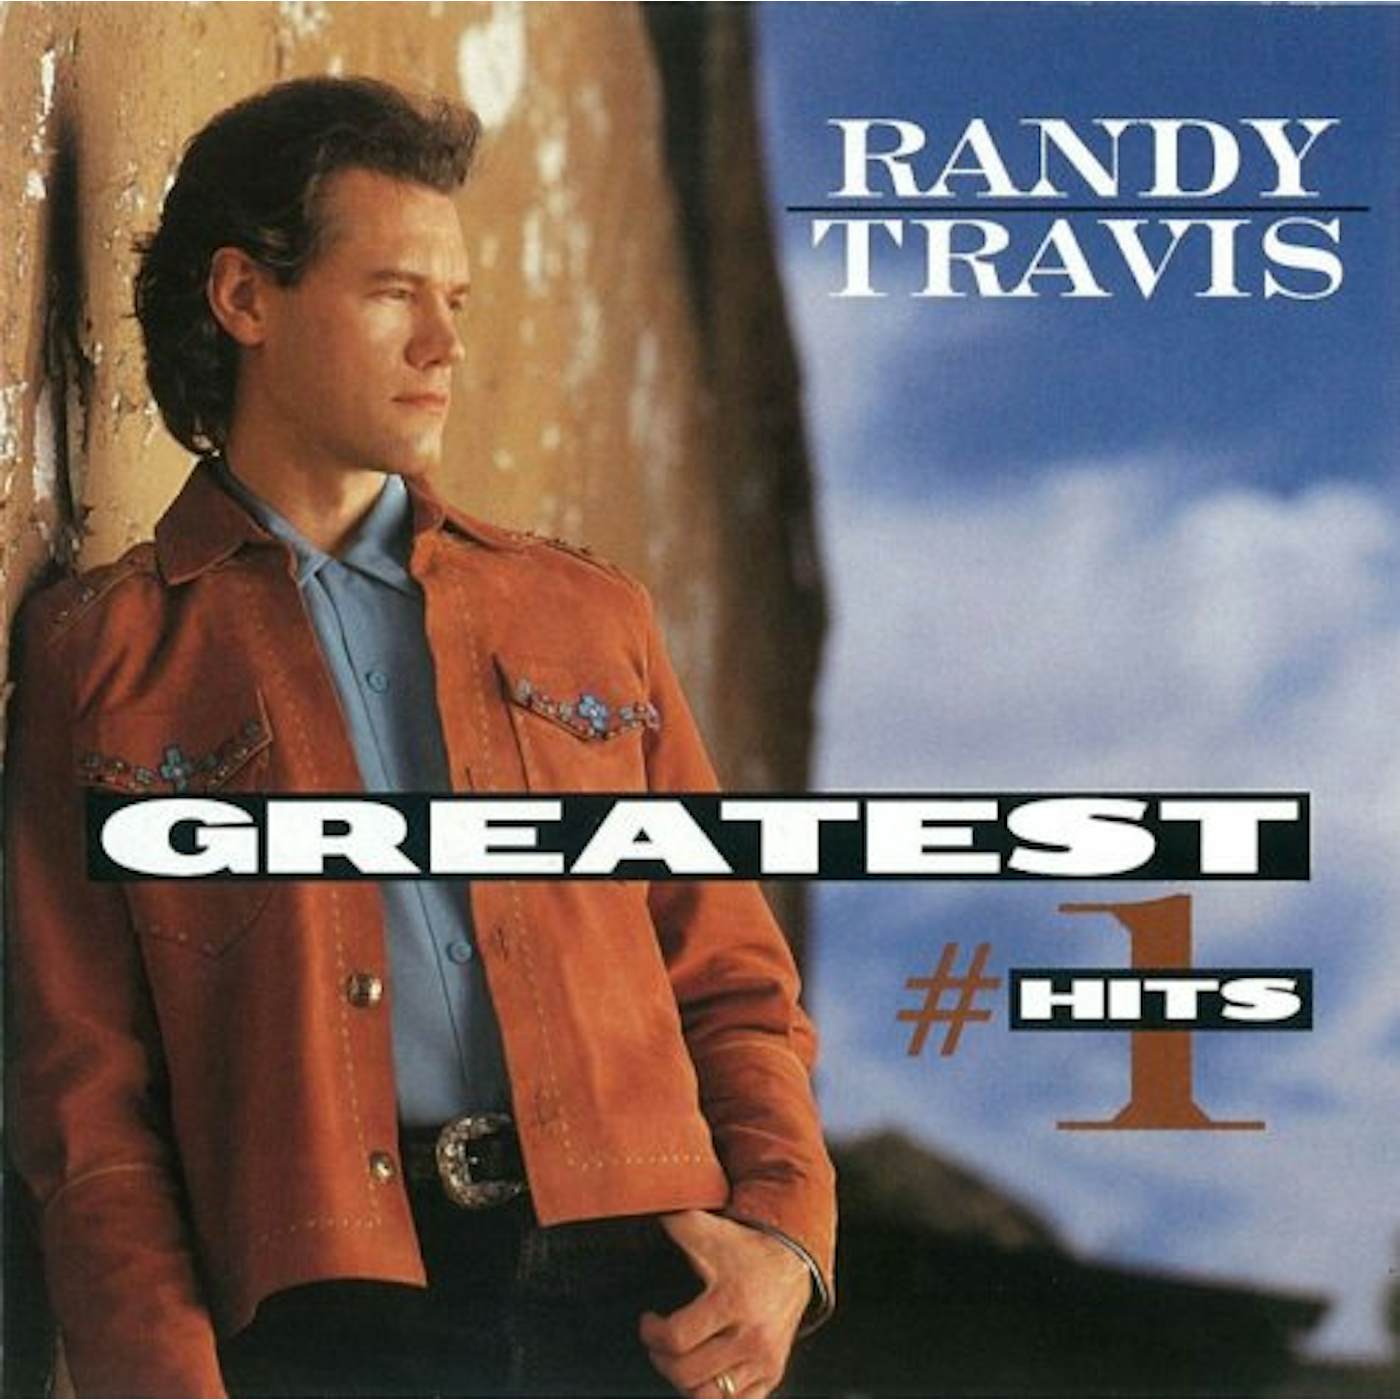 Randy Travis GREATEST #1 HITS CD